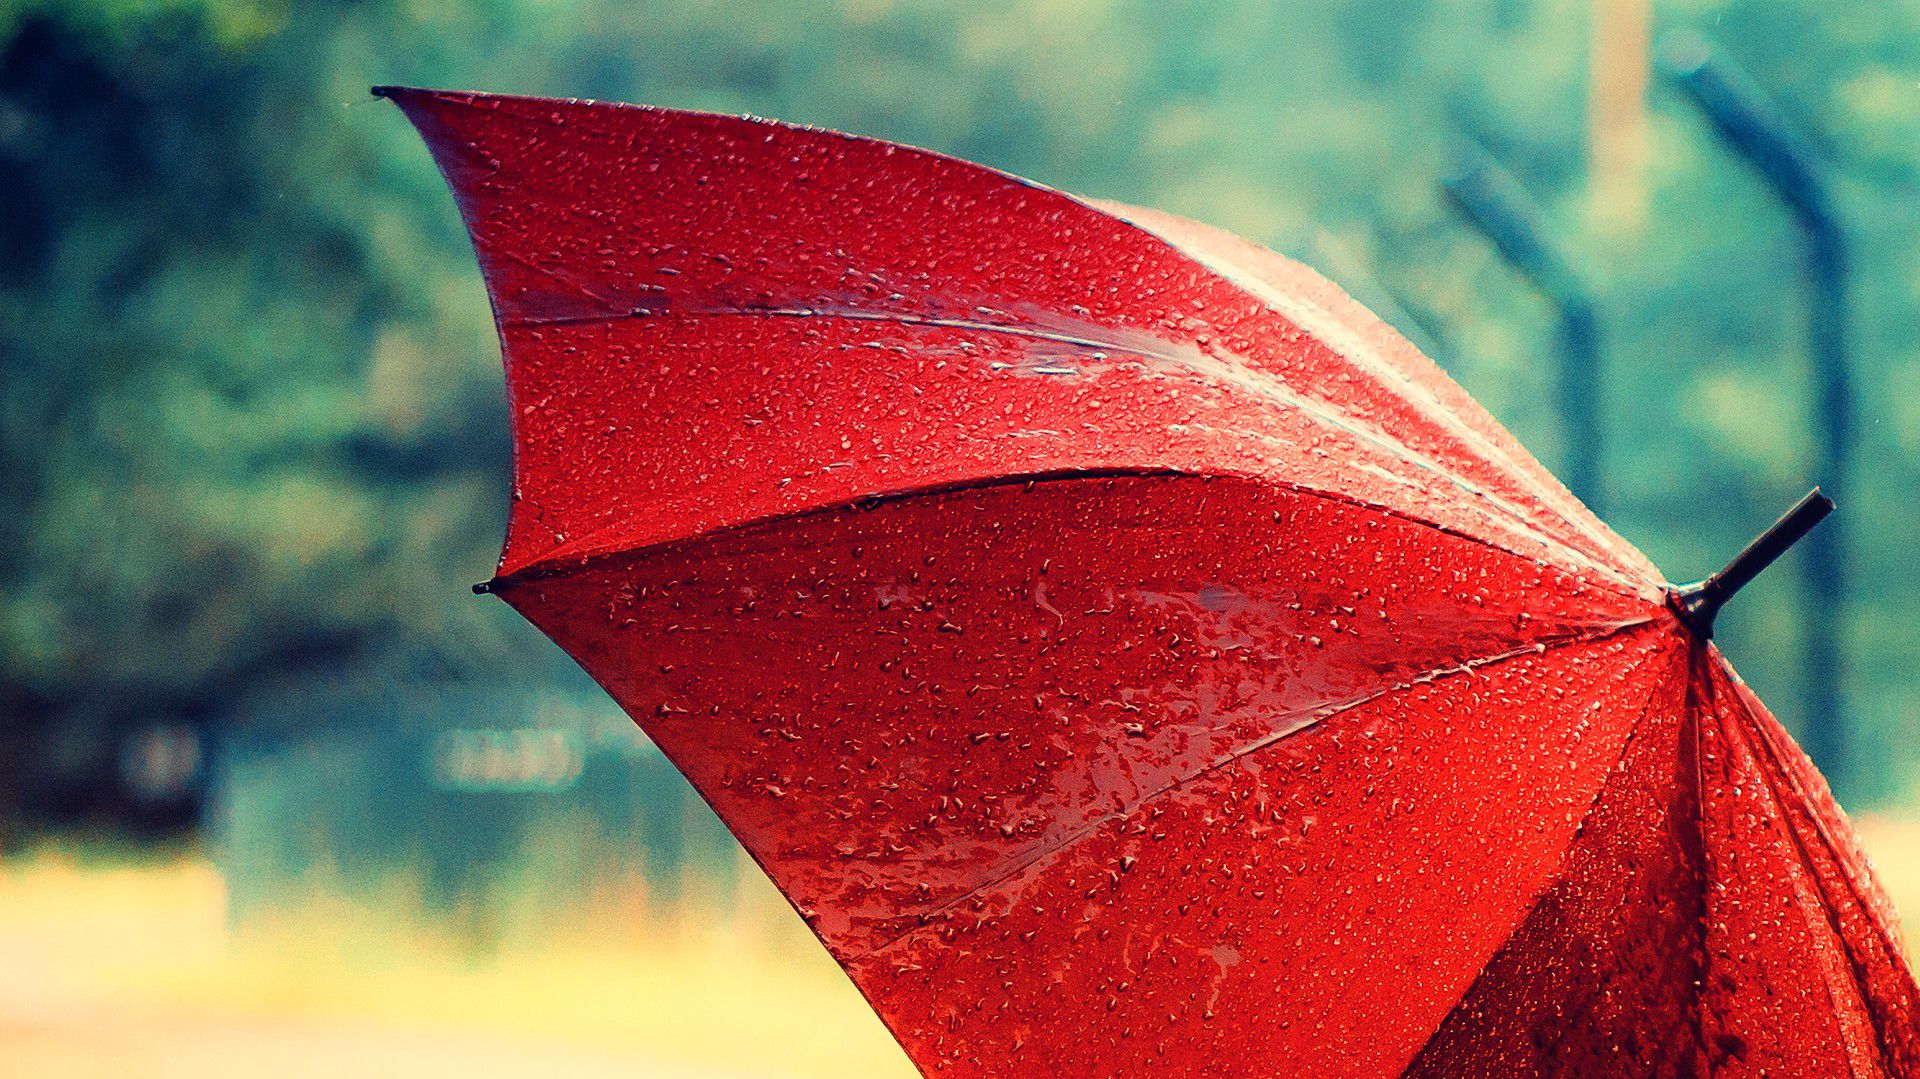 Red Umbrella Stock Photos wallpaper | nature and landscape ...